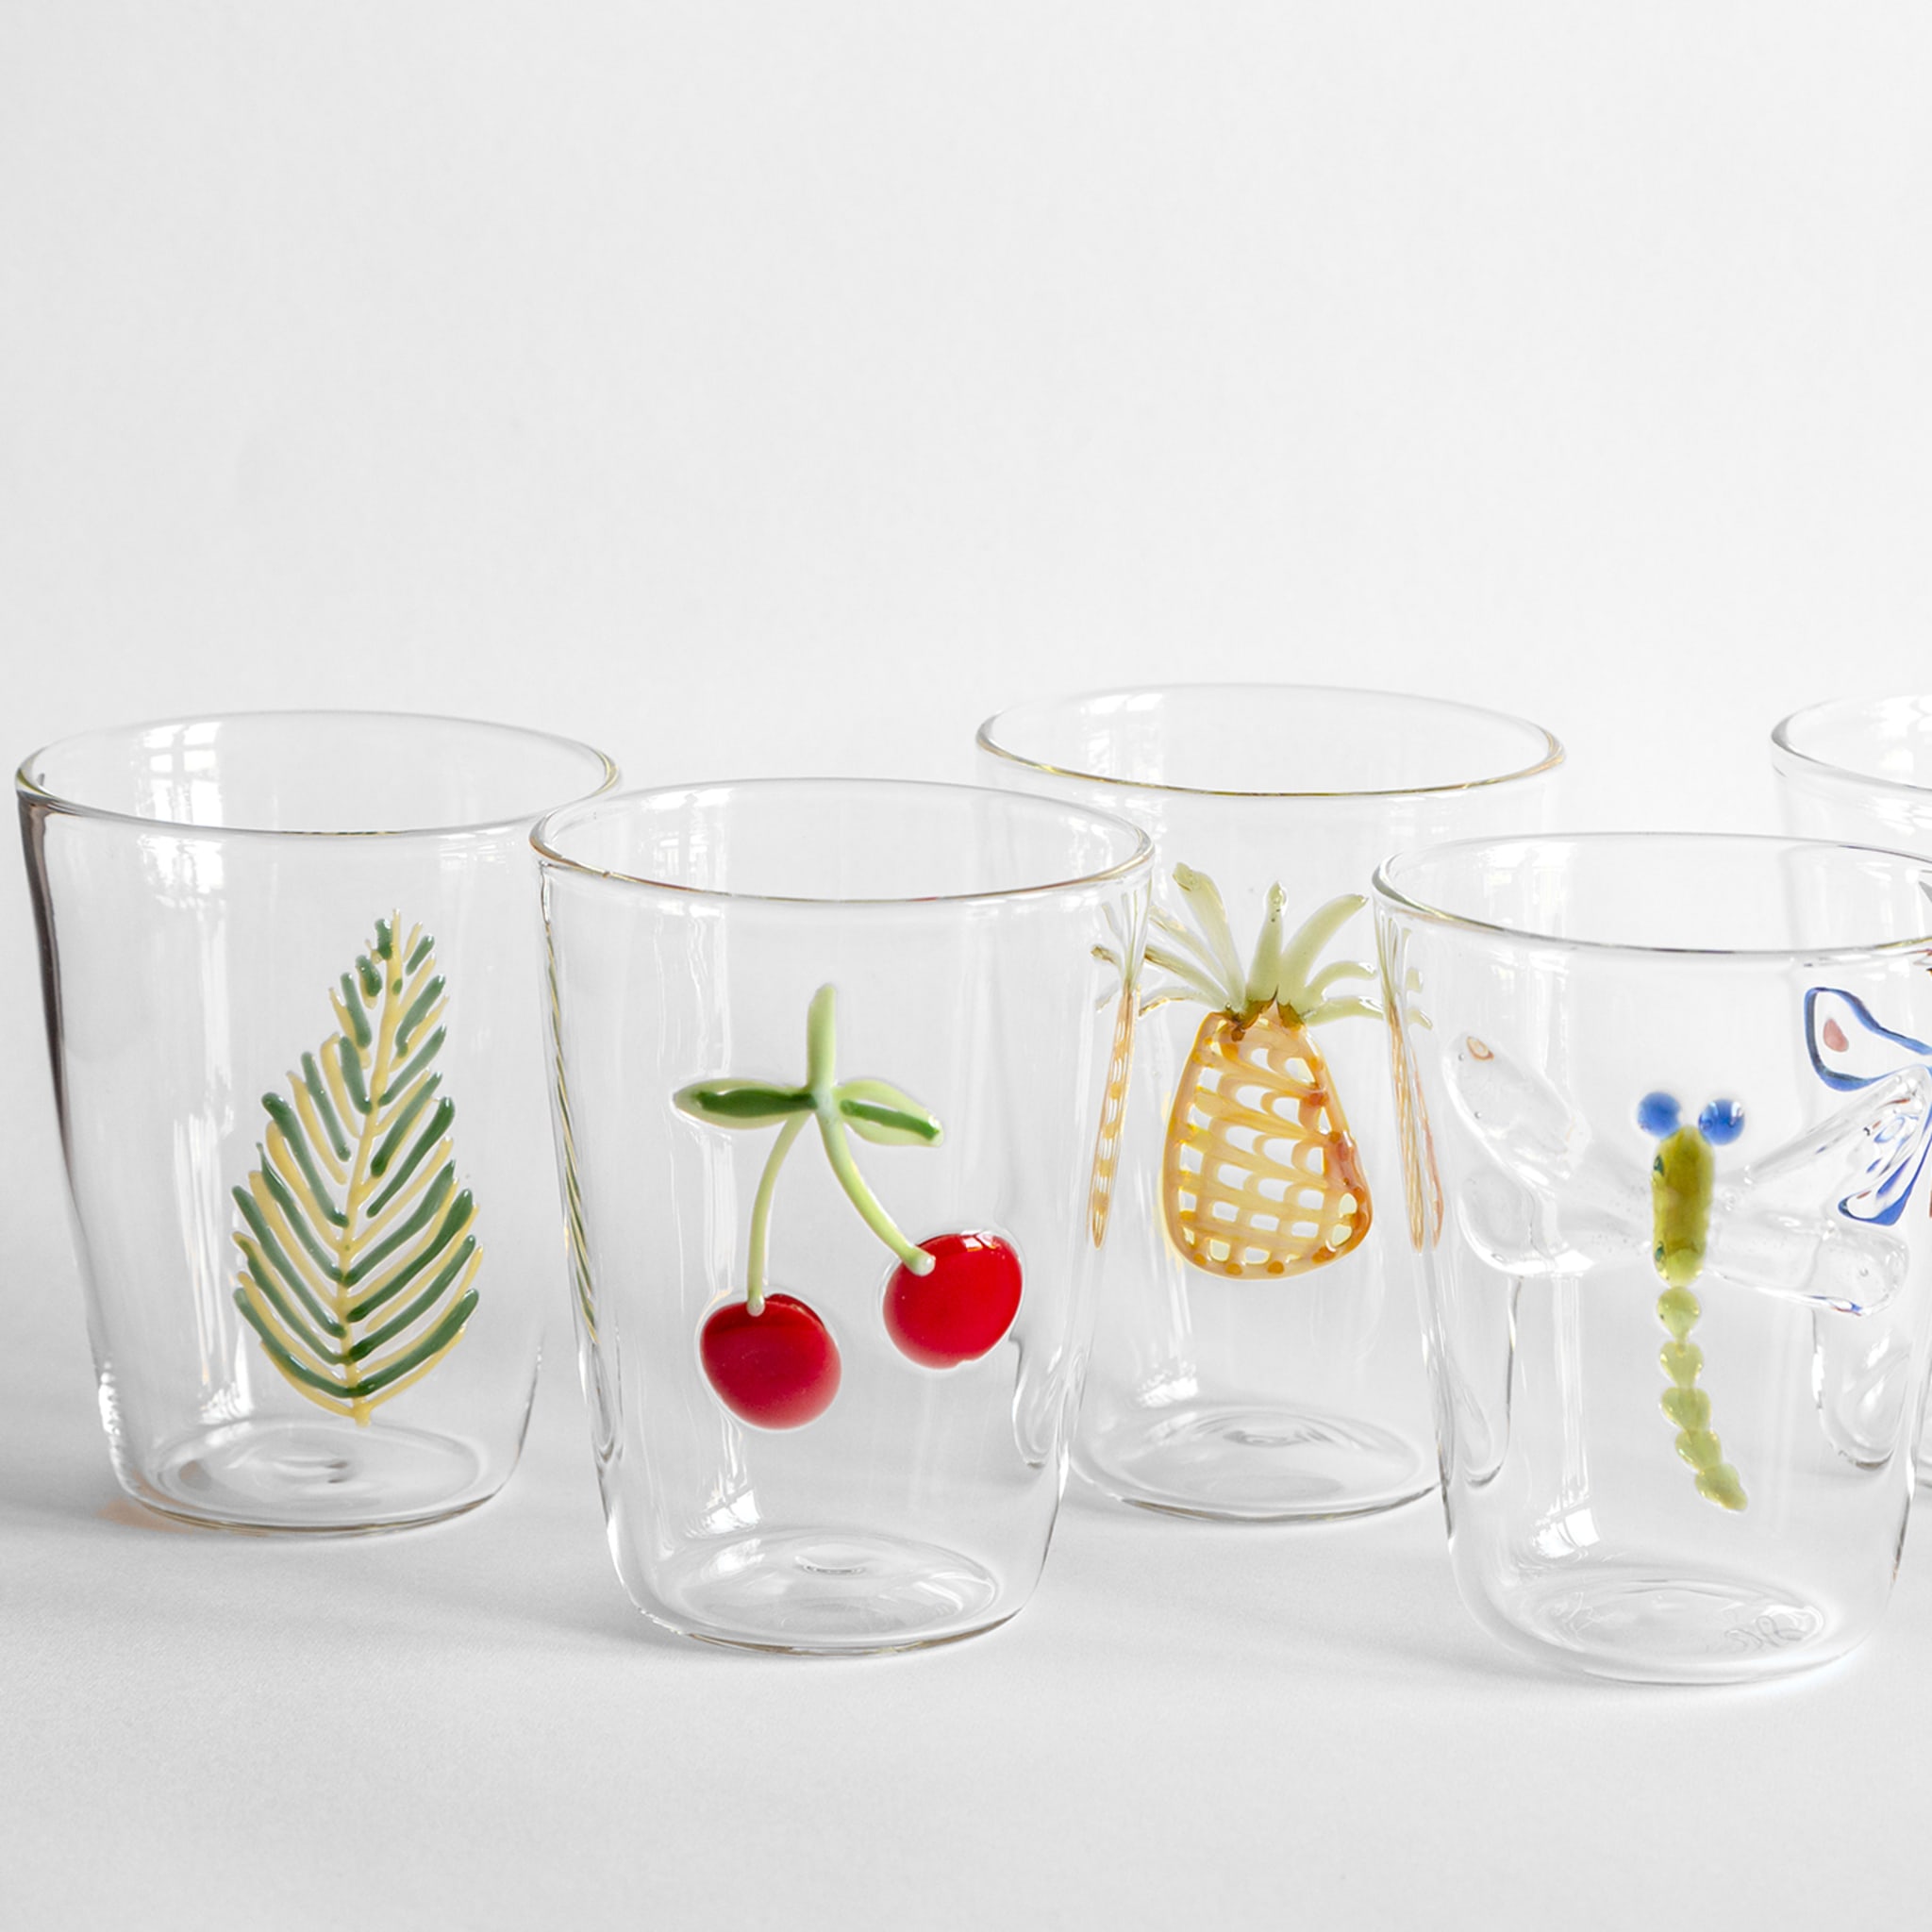 Cabinet De Curiosités Set Of 6 Water Glasses With Natural Elements - Alternative view 2